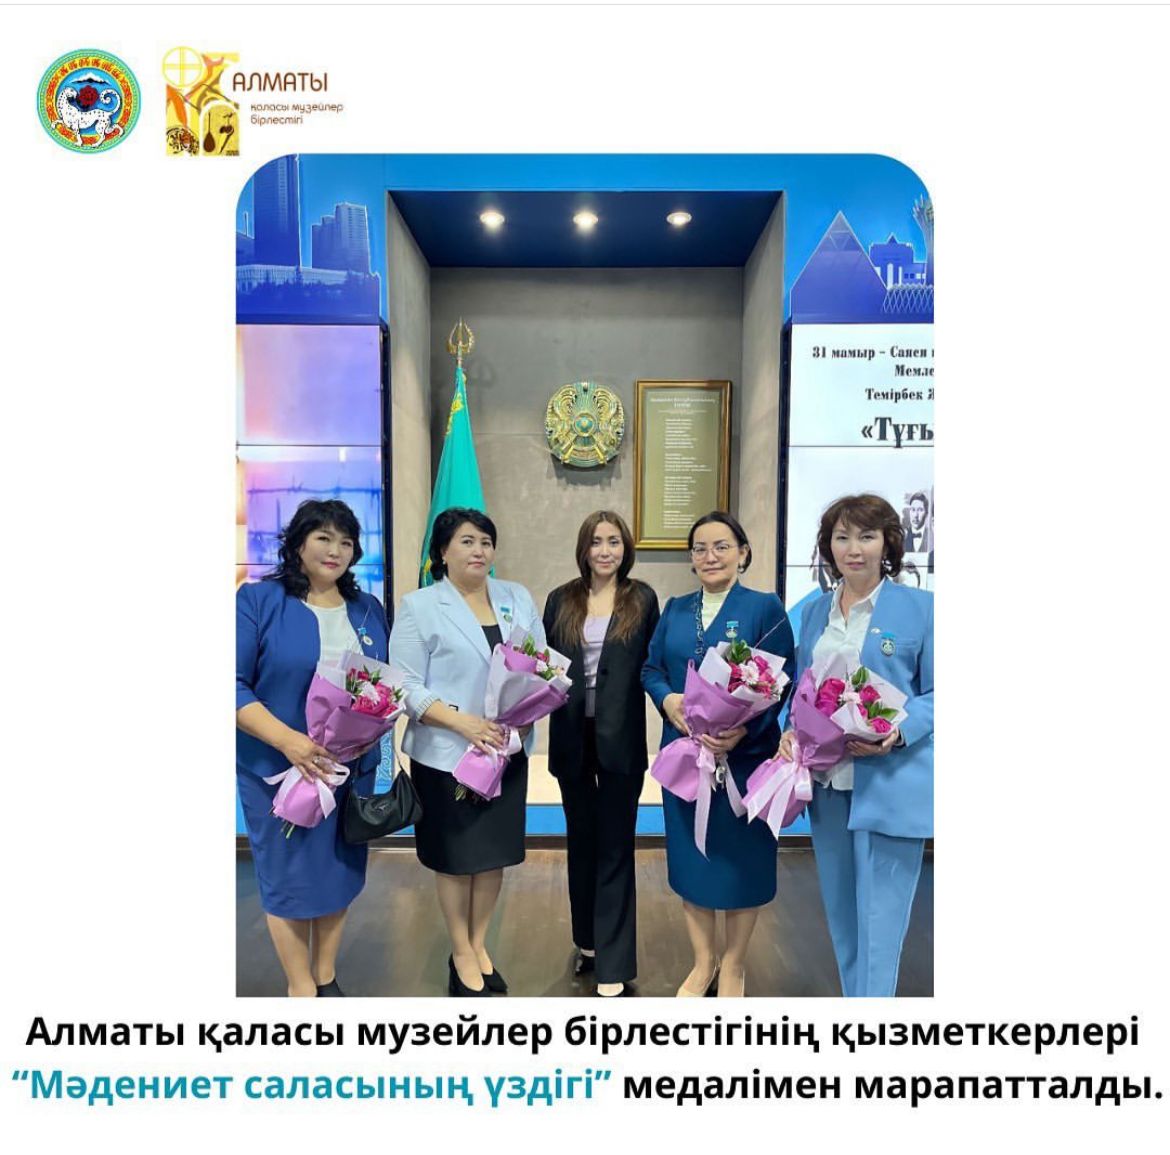 Сотрудники Объединение музеев города Алматы награждены медалью «Мәдениет саласының үздігі».